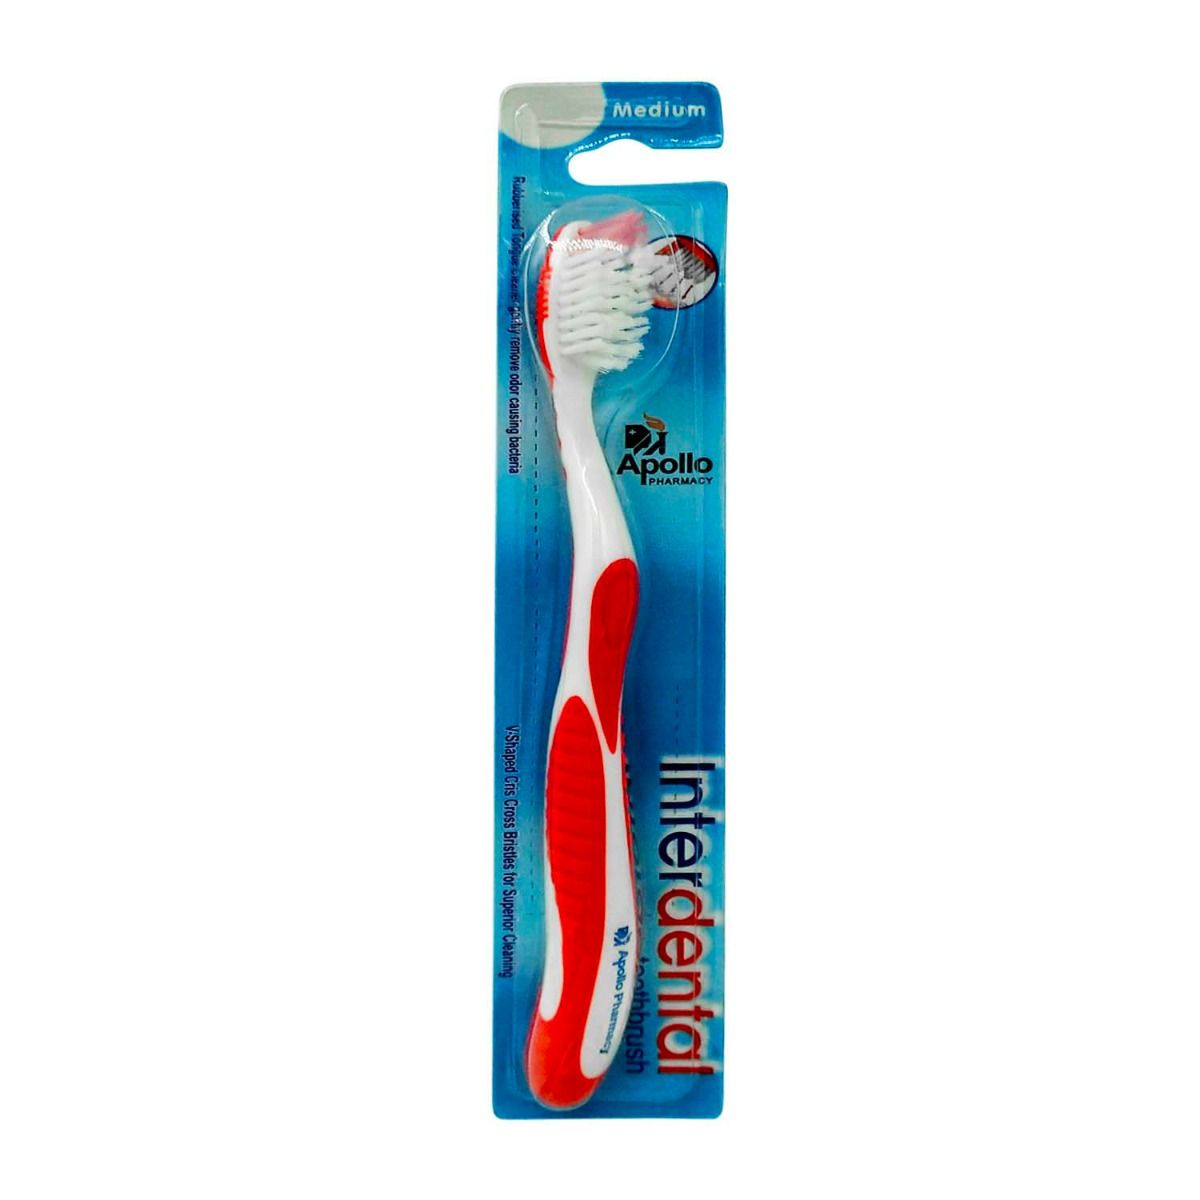 Apollo Pharmacy Zig Zag Interdental Toothbrush, 1 Count, Pack of 1 